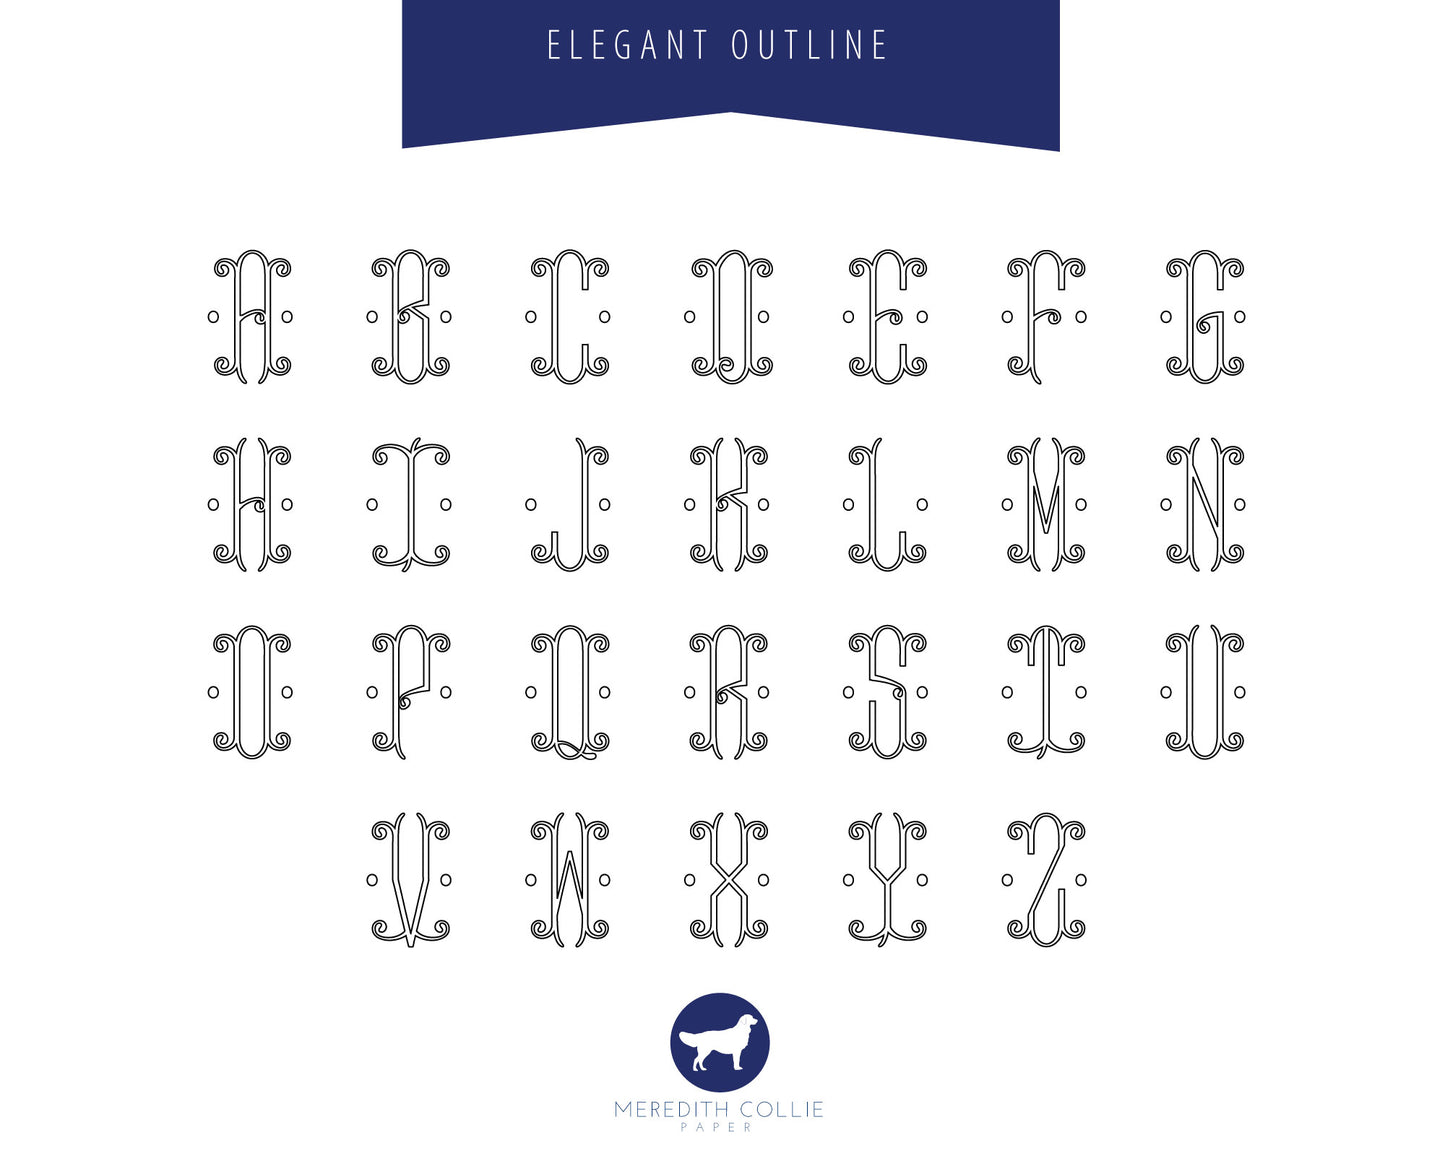 Elegant Outline Single Initial Monogram Folded Note Cards